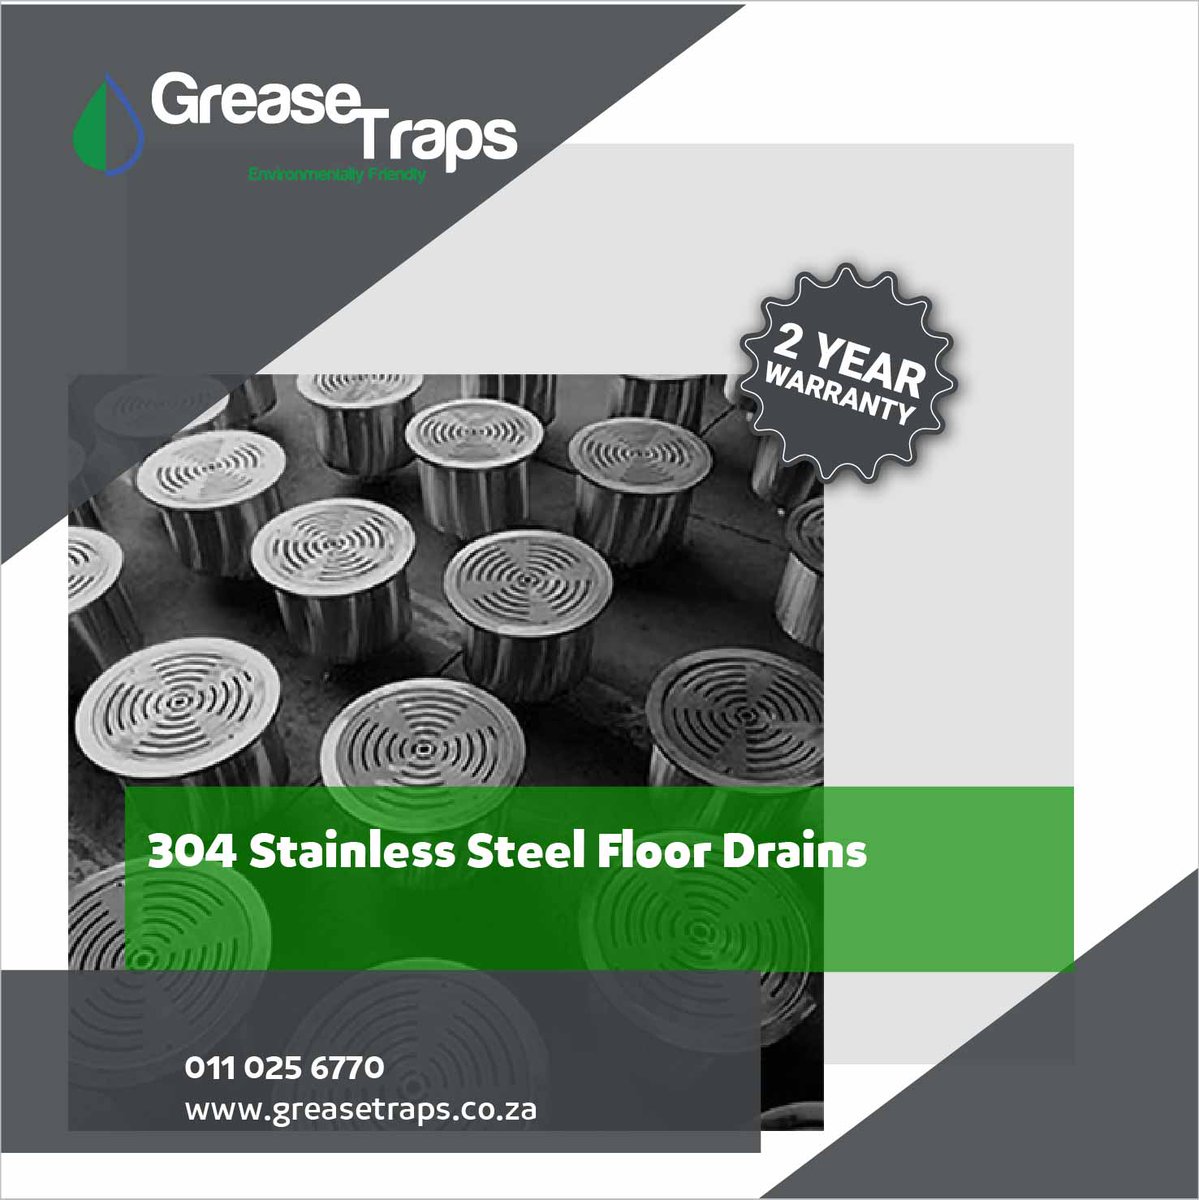 Grease Traps South Africa has been manufacturing stainless steel floor drains for over 20 years!⁣

#floordrains #304stainlesssteel #plumbingproducts #since1995 #twoyearwarranty #commercialplumbing #plumbingsupply #greasetrapssa⁣